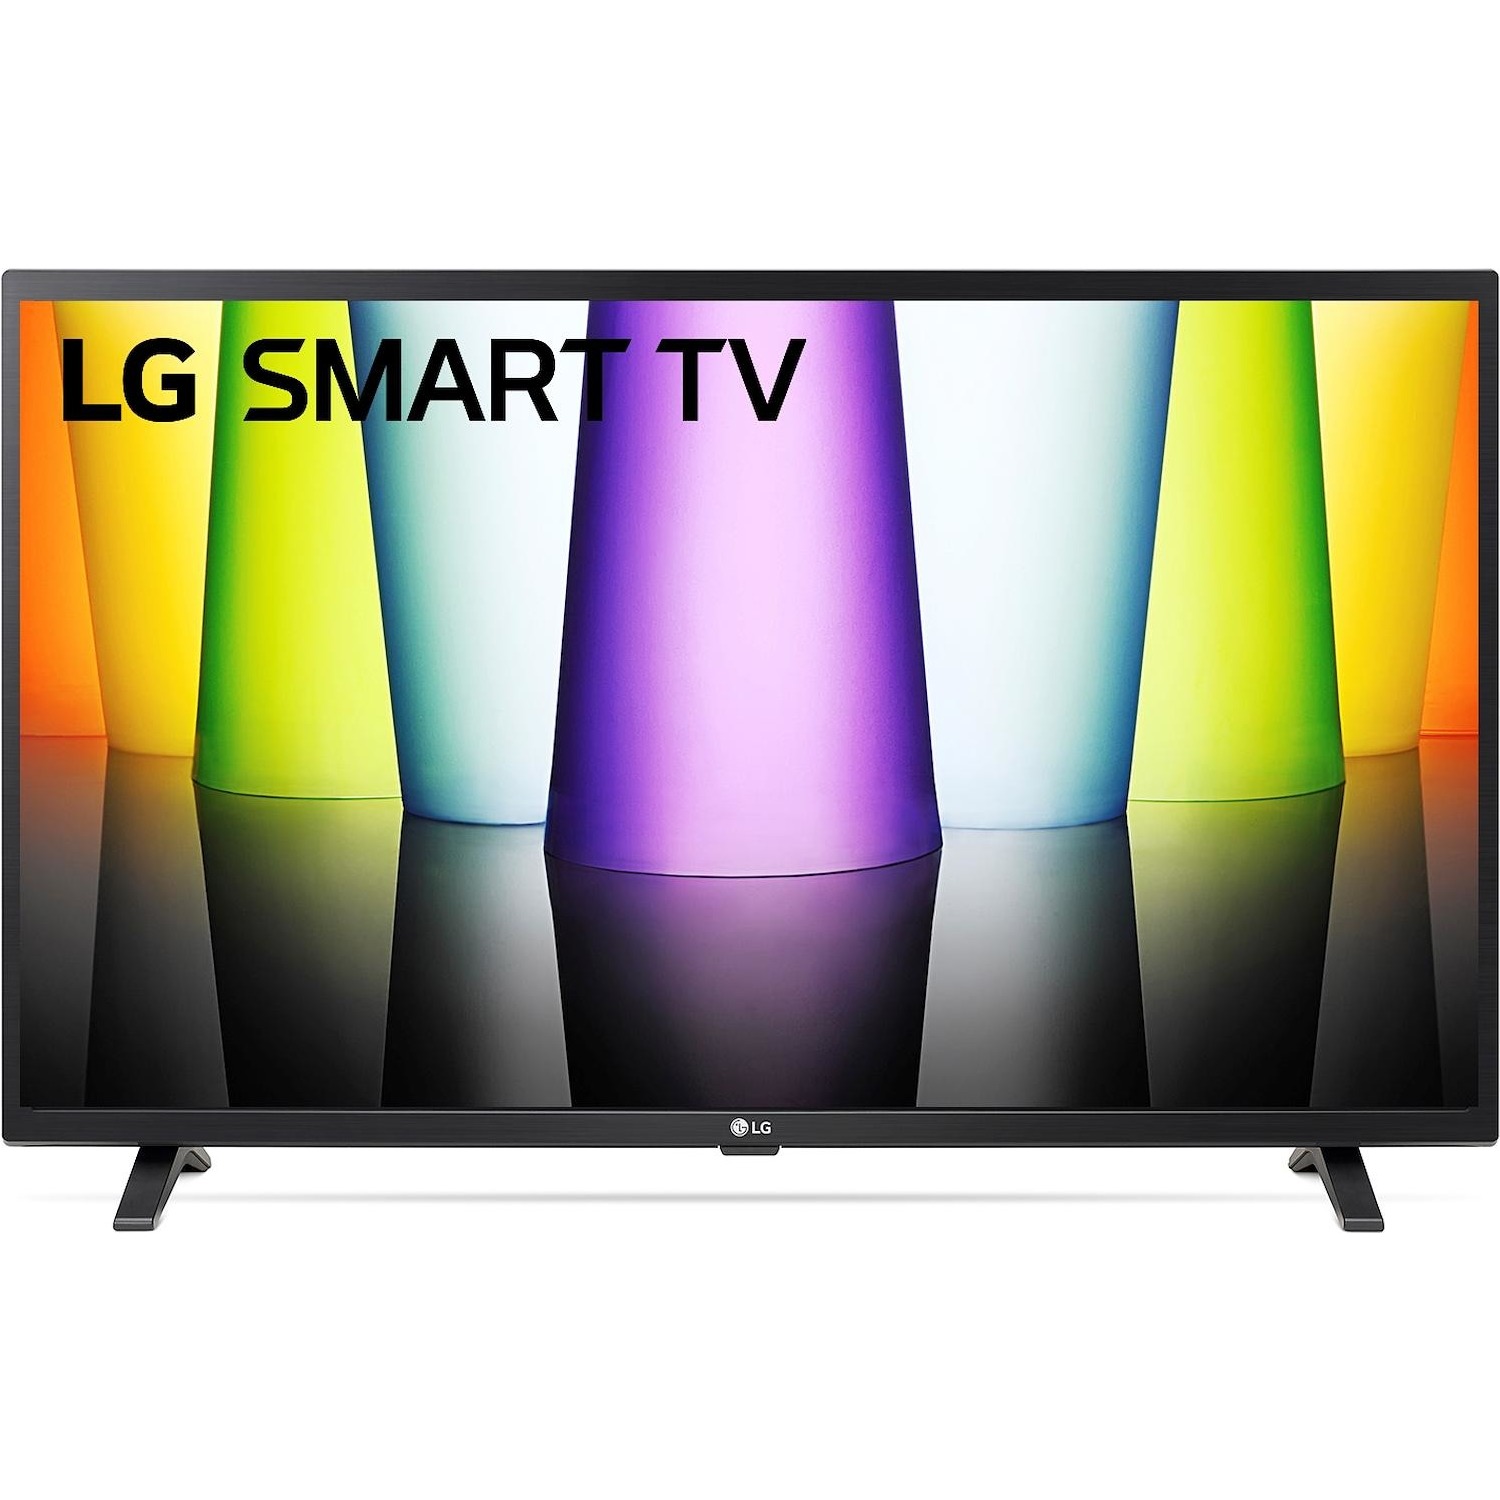 Immagine per TV LED Smart LG 32LQ630B da DIMOStore